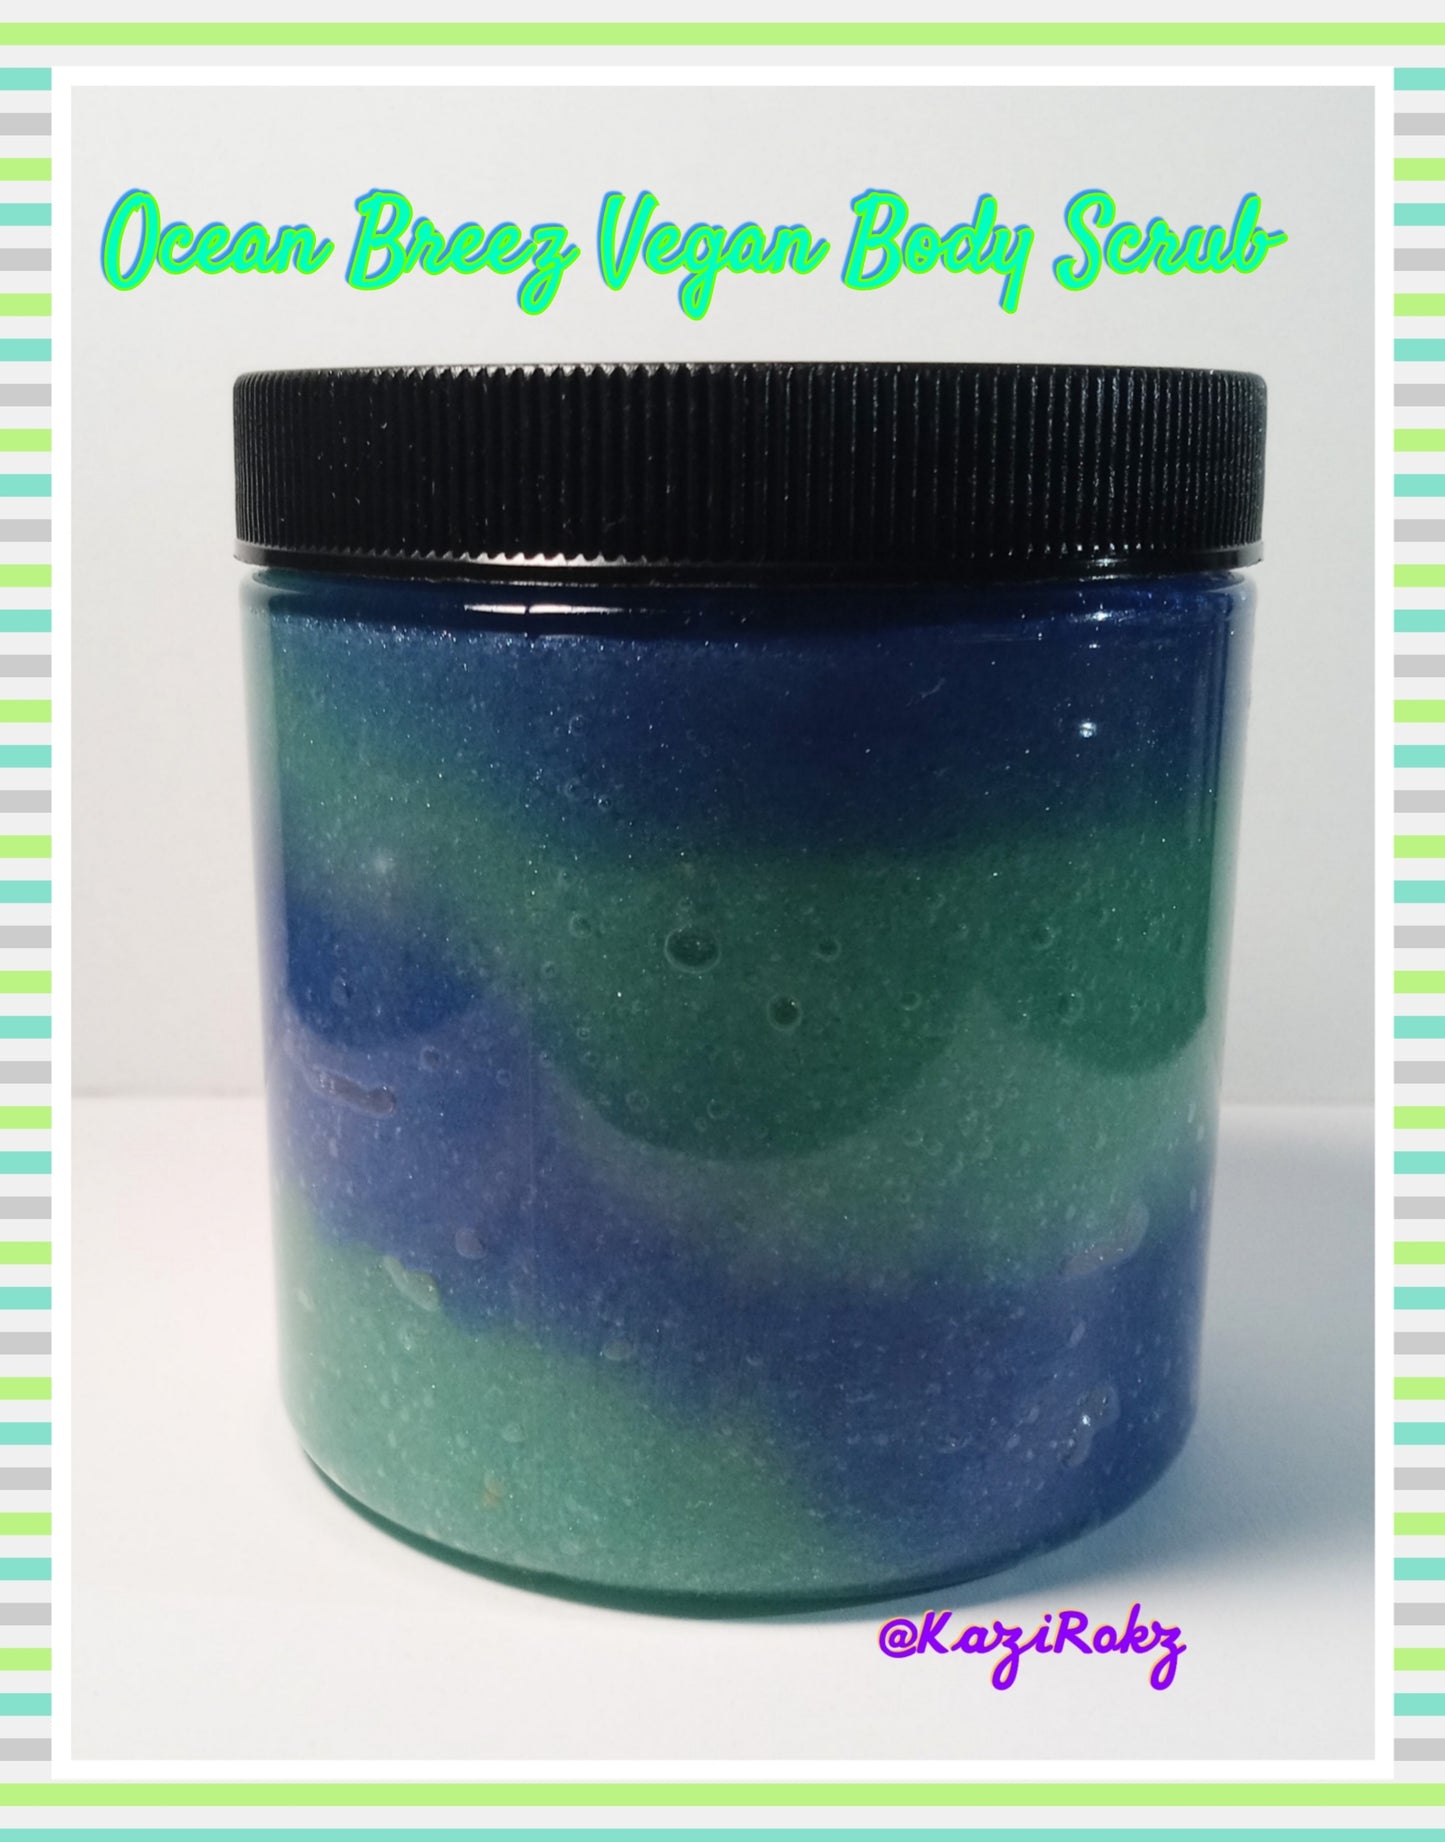 Ocean Breez Vegan Body Scrub (facial / body cleanser & moisturizer)